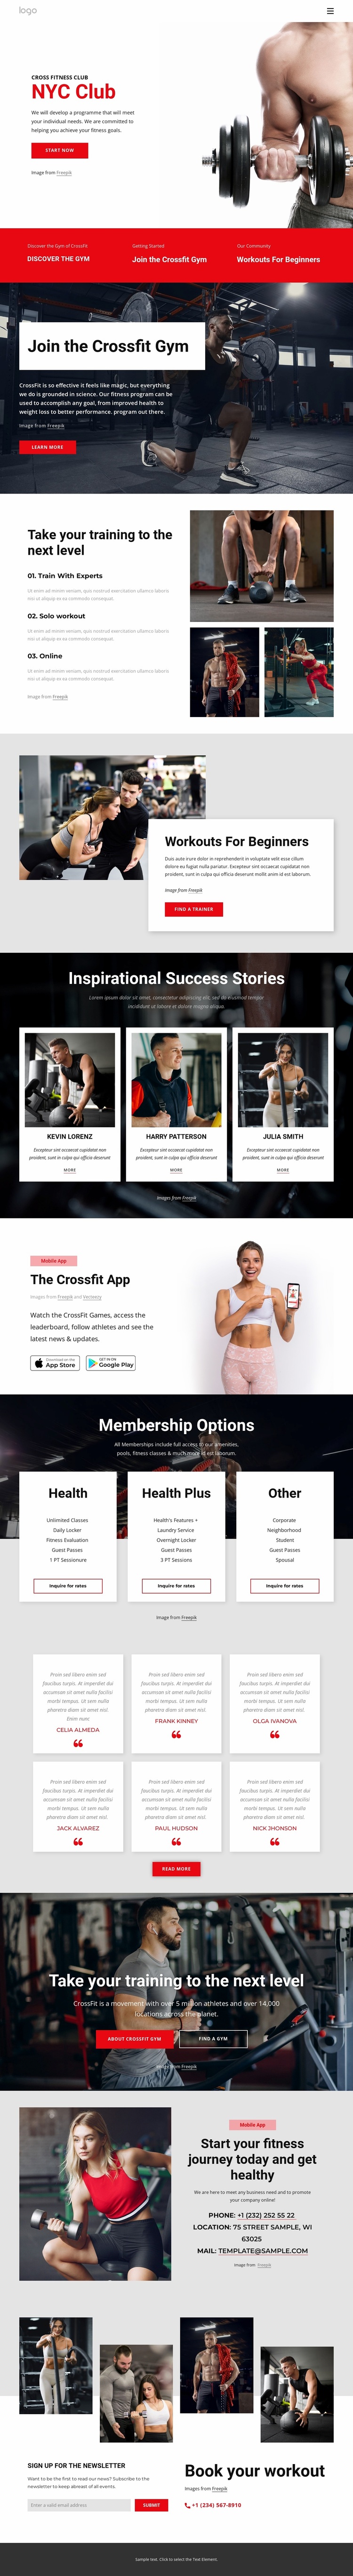 Cross fitness club Website Design